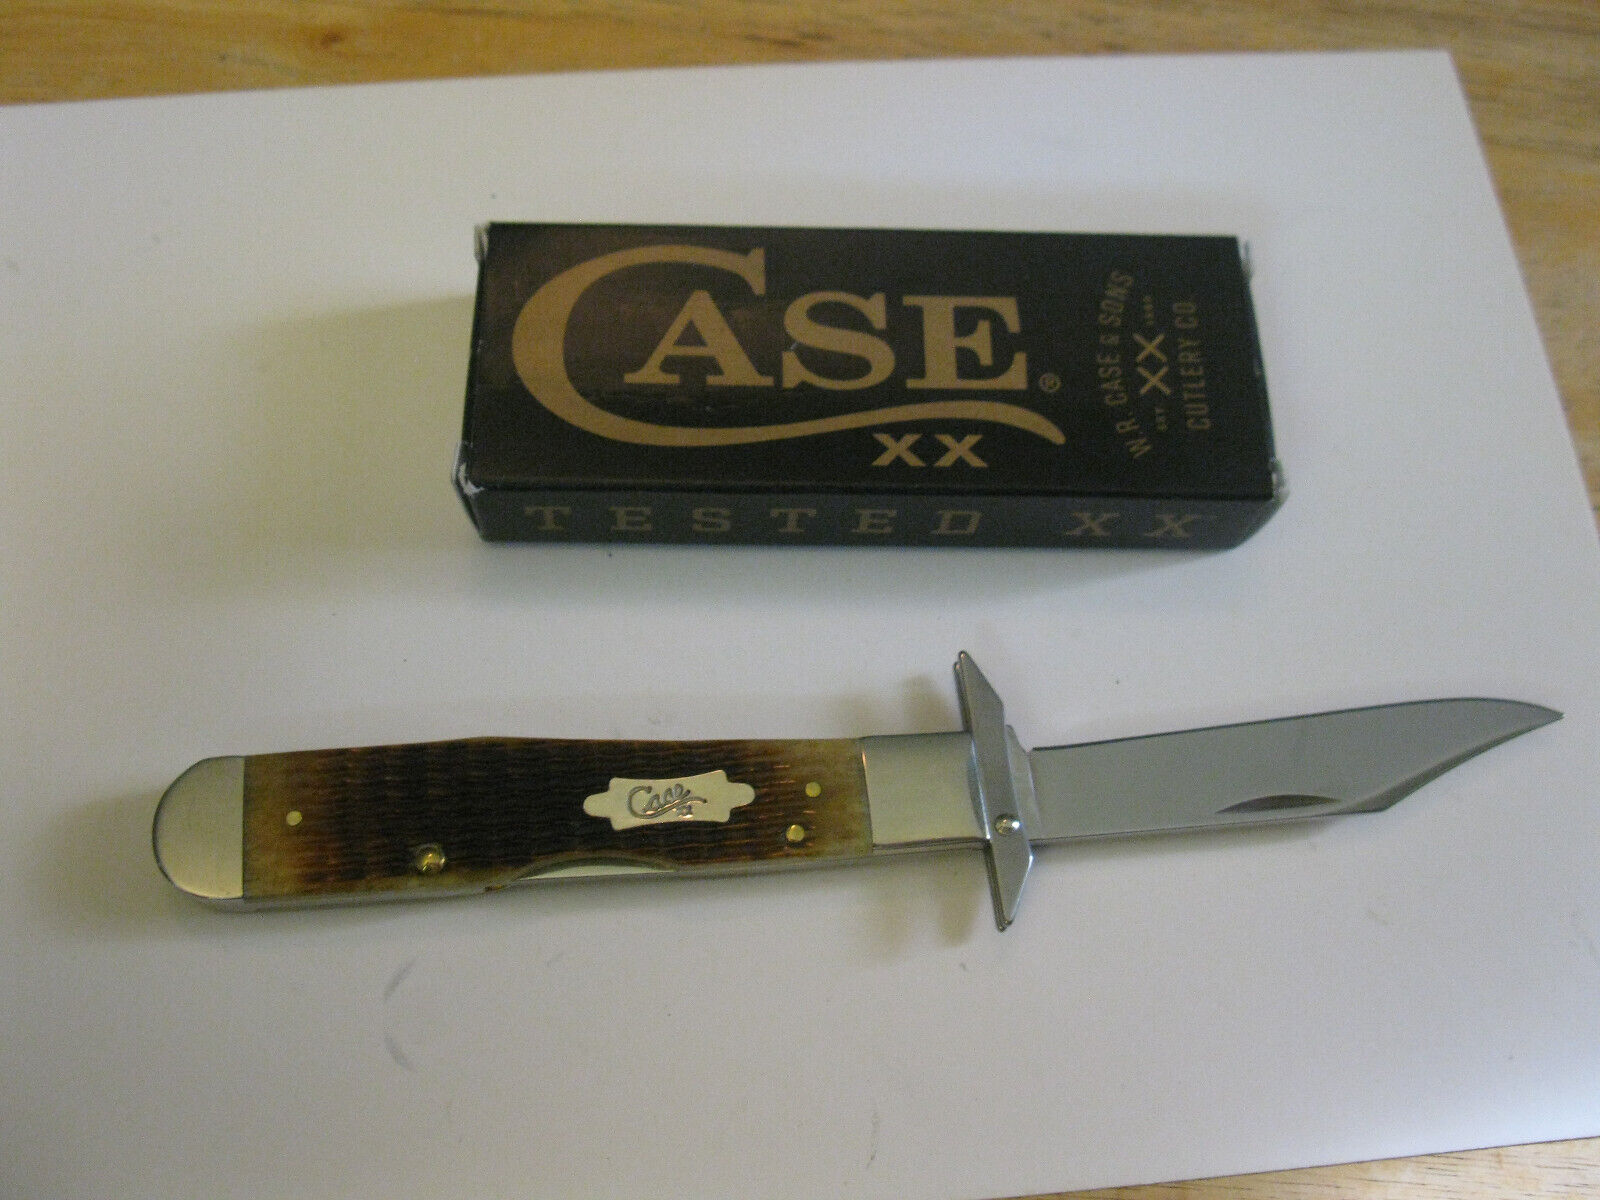 2022 CASE XX USA CHEETAH Knife 6111 1 2L SS ANTIQUE ROGERS CORN COB Jig